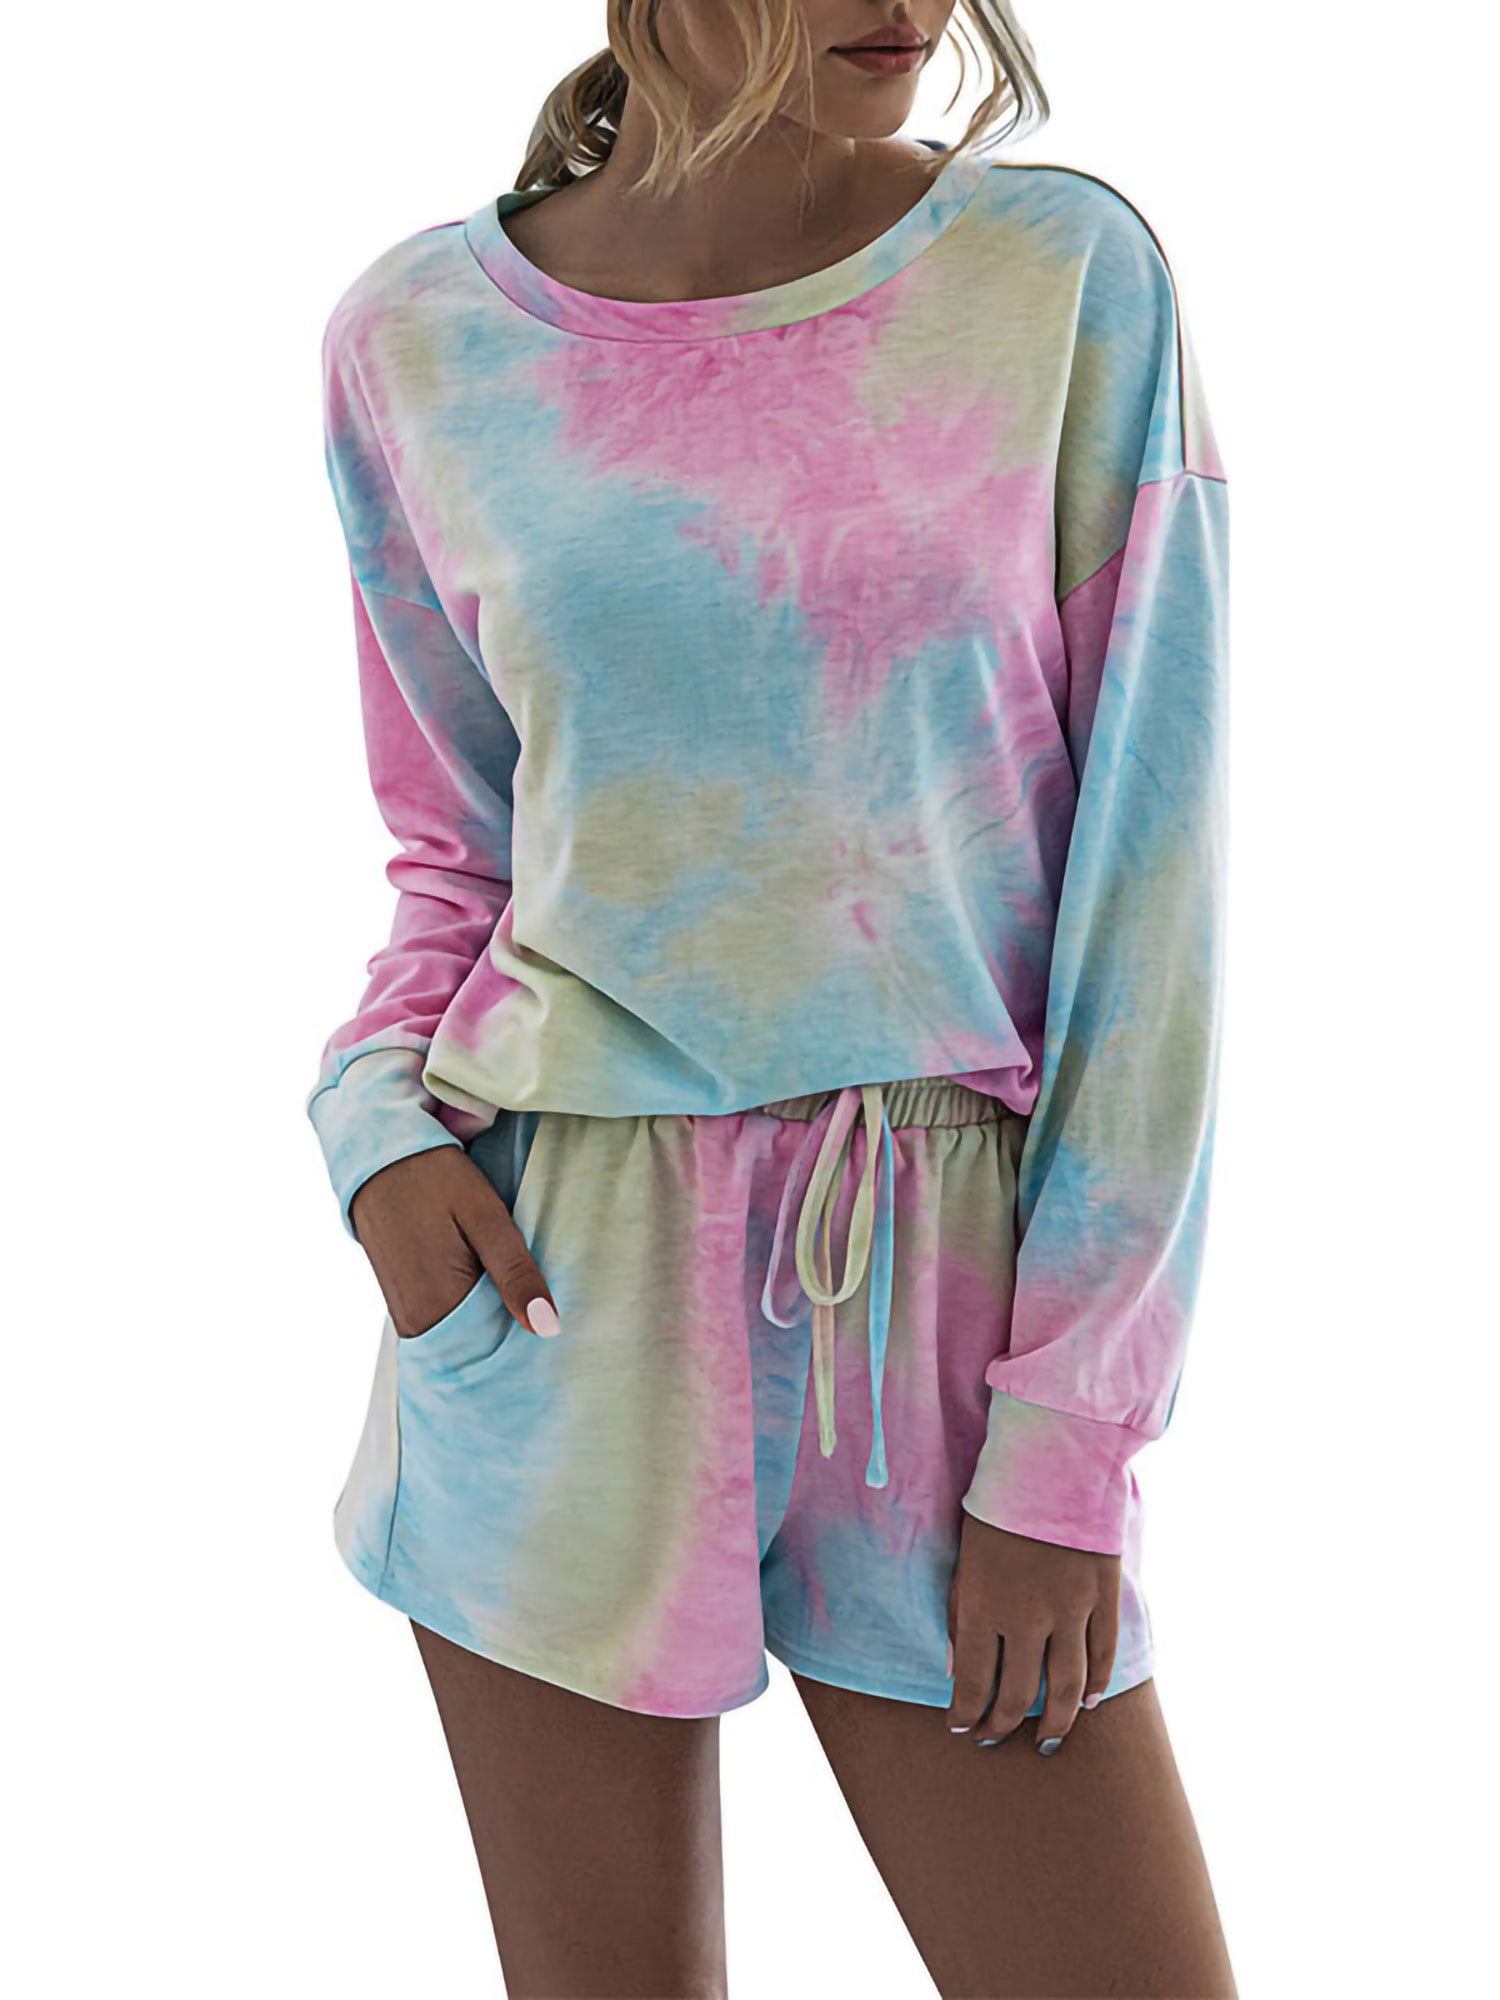 kayamiya Pajamas for Women Tie Dye Printed Long Sleeve Tops and Shorts PJ Sets 2 Piece Pajamas Set Sleepwear Nightwear